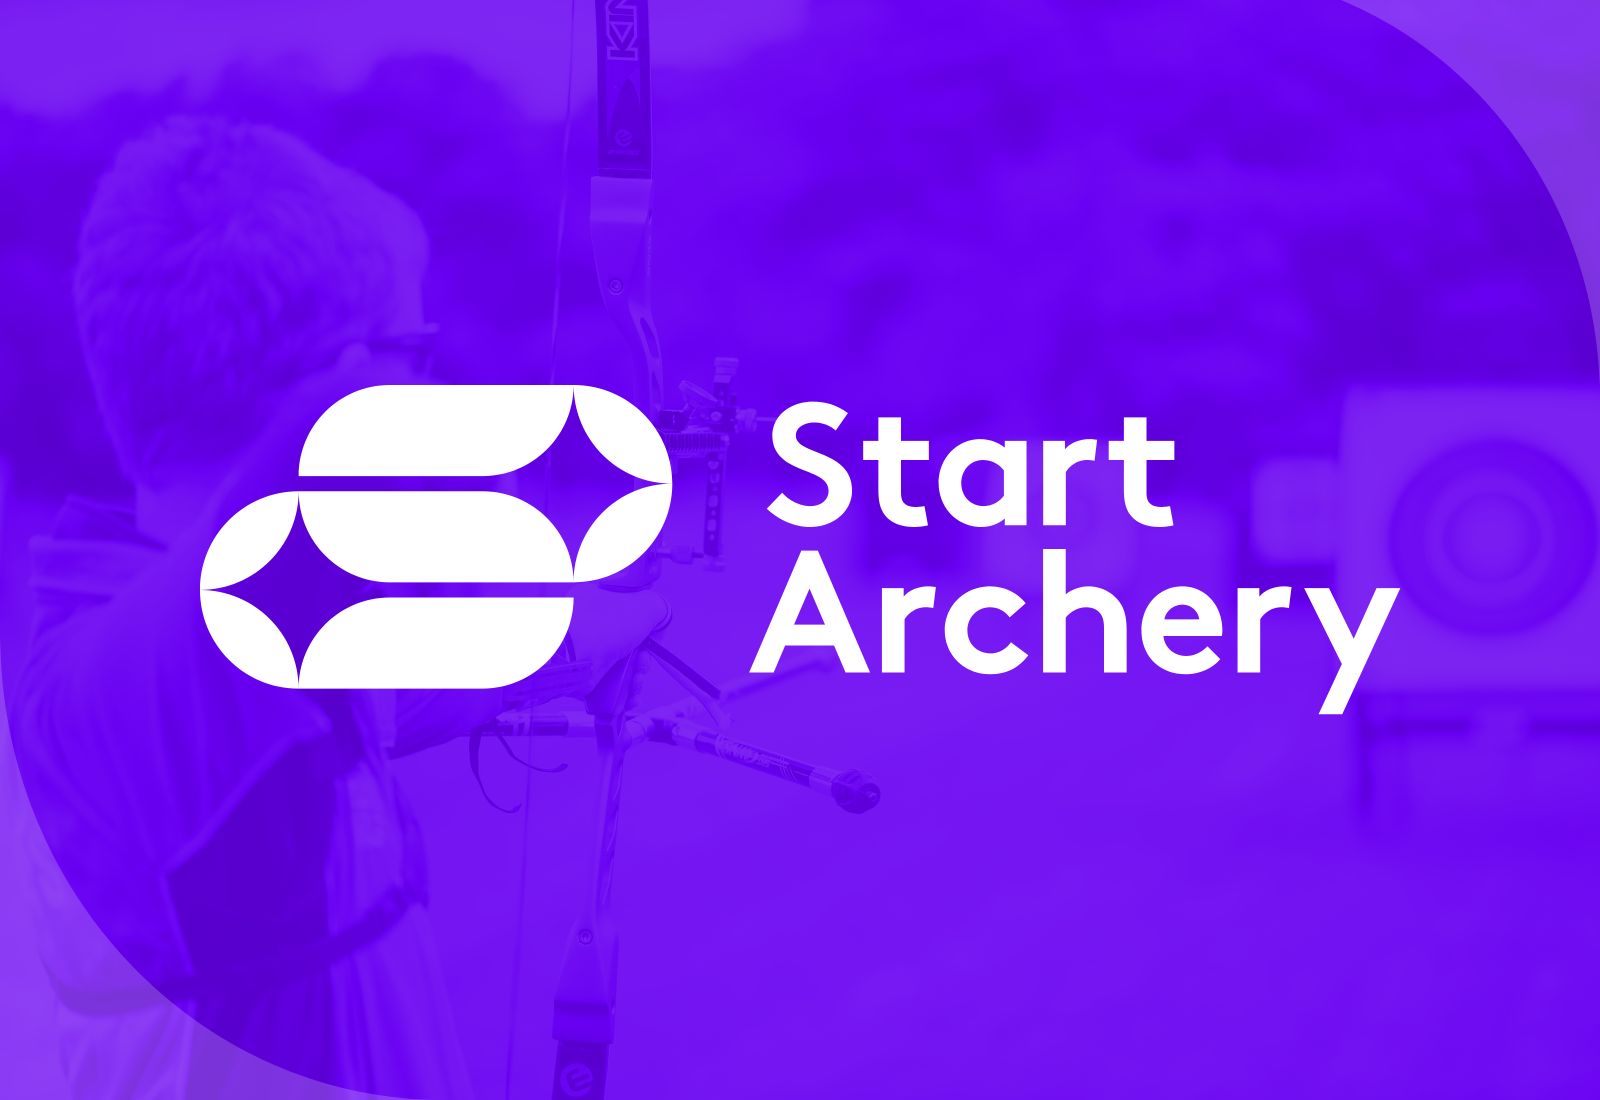 Start Archery Branding 93ft Sheffield